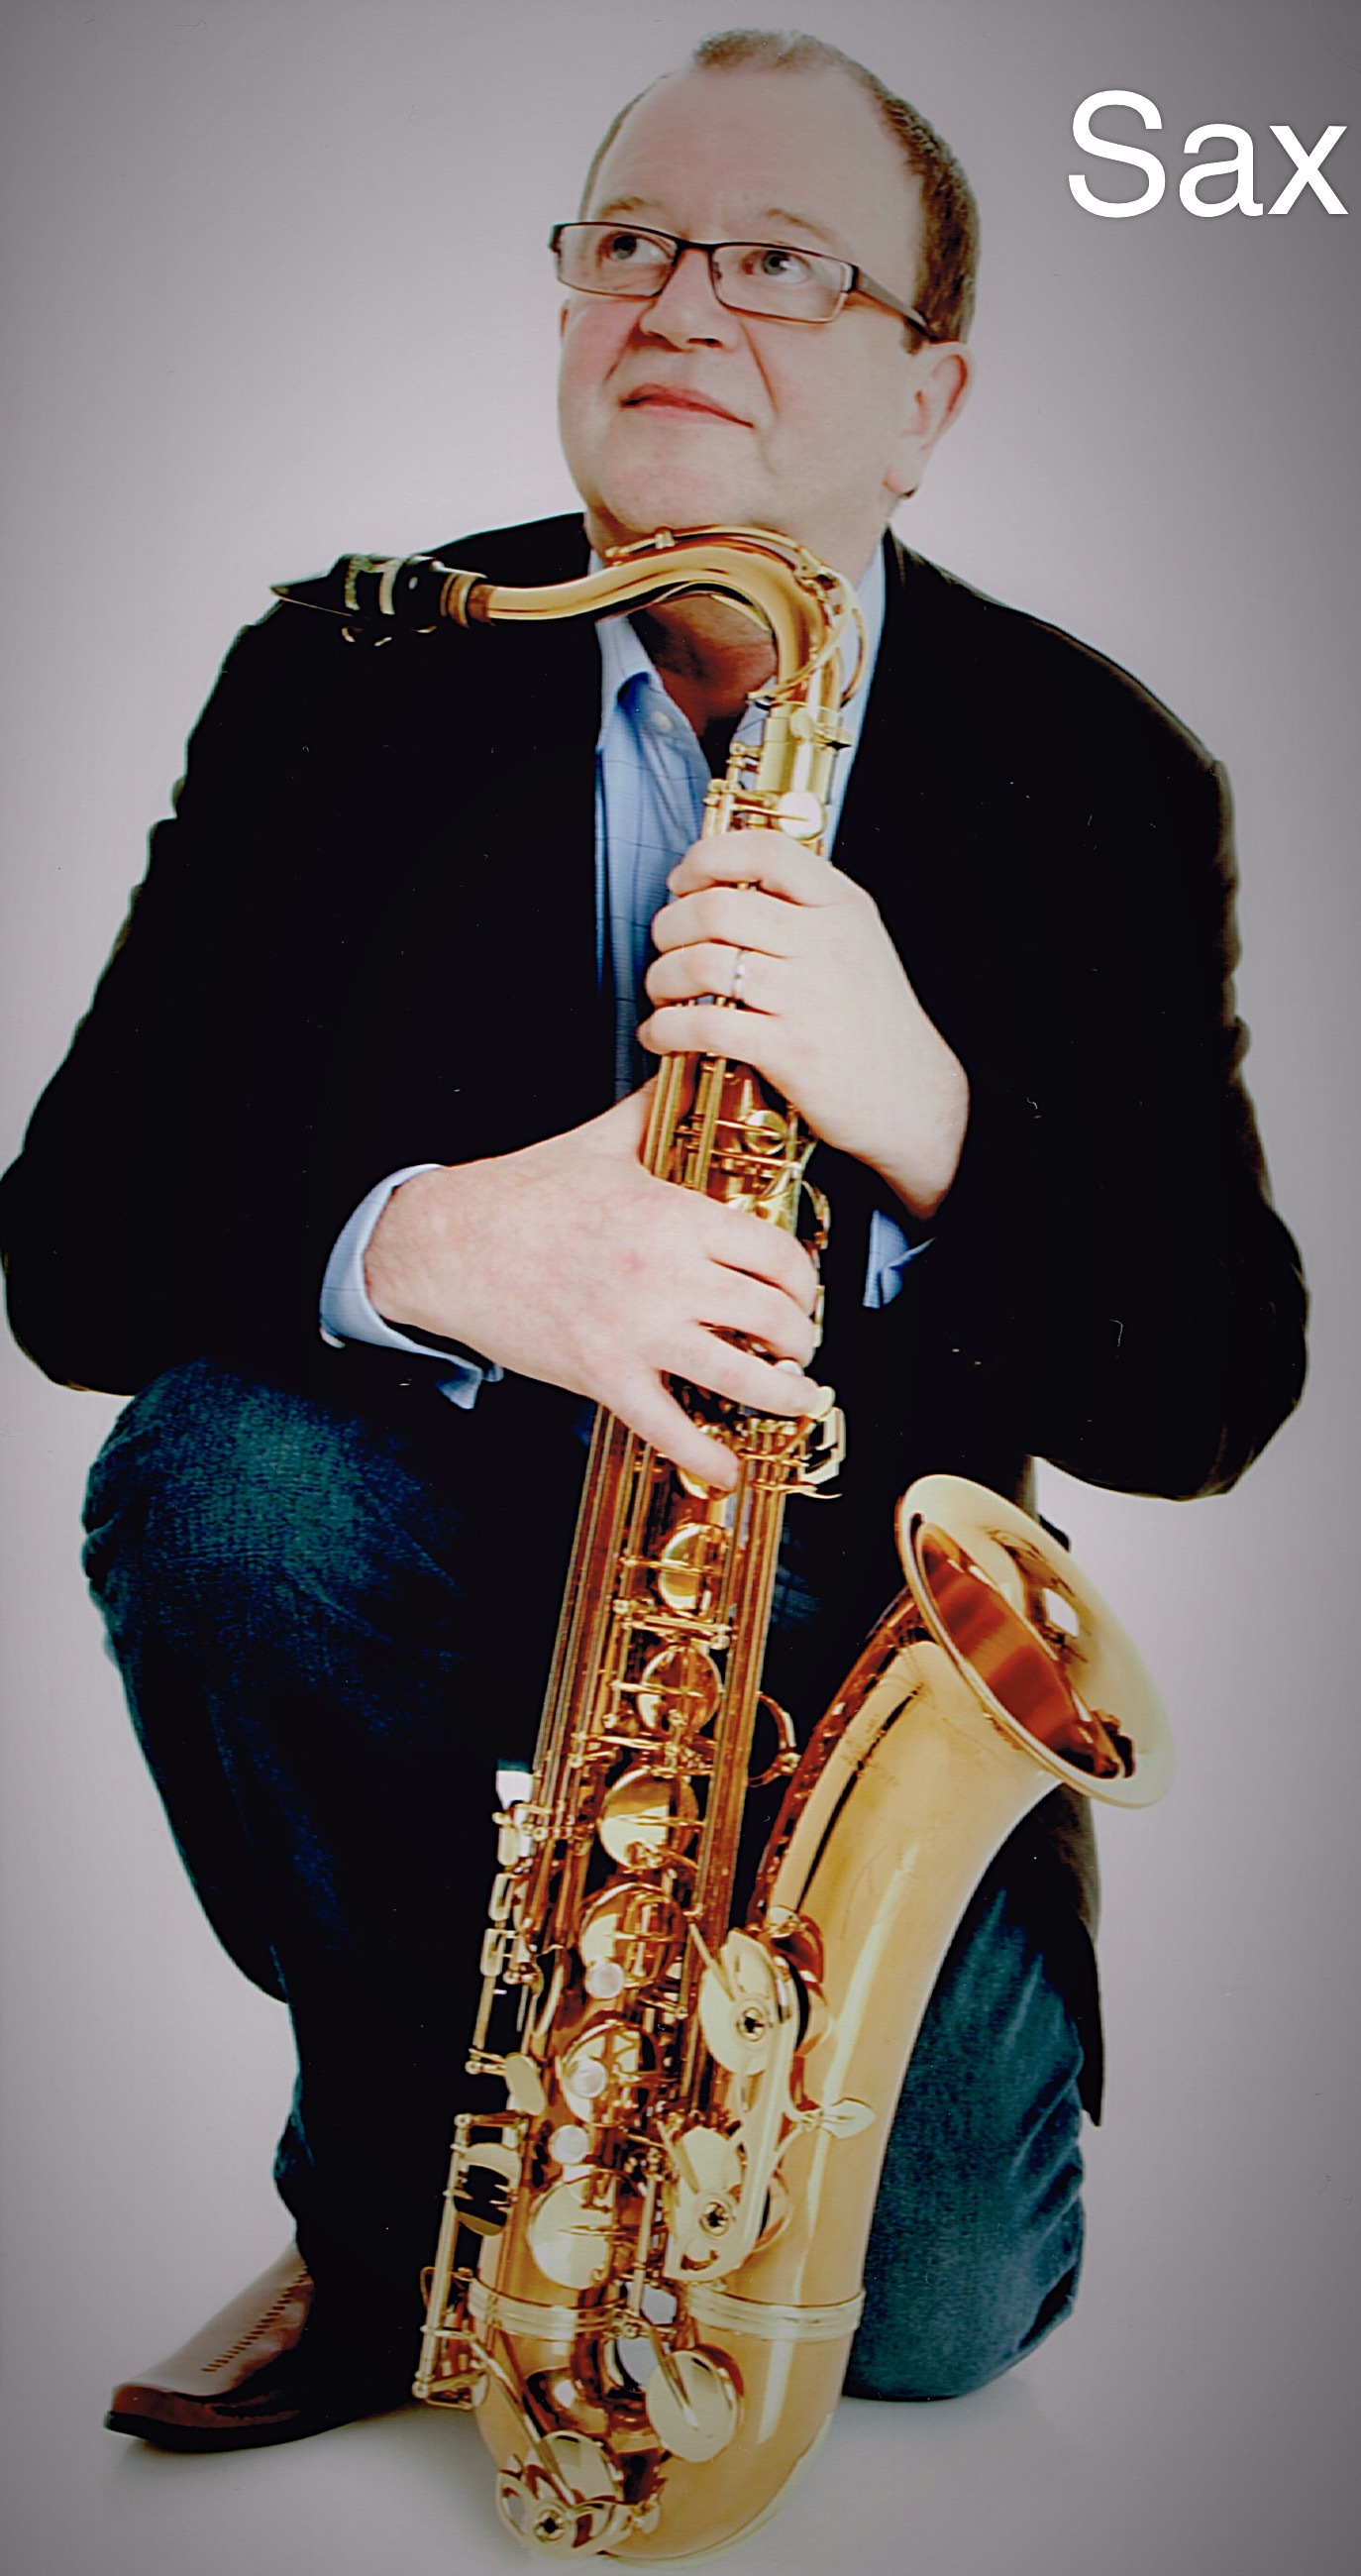 Saxophonist Ken in Fife, Central Scotland